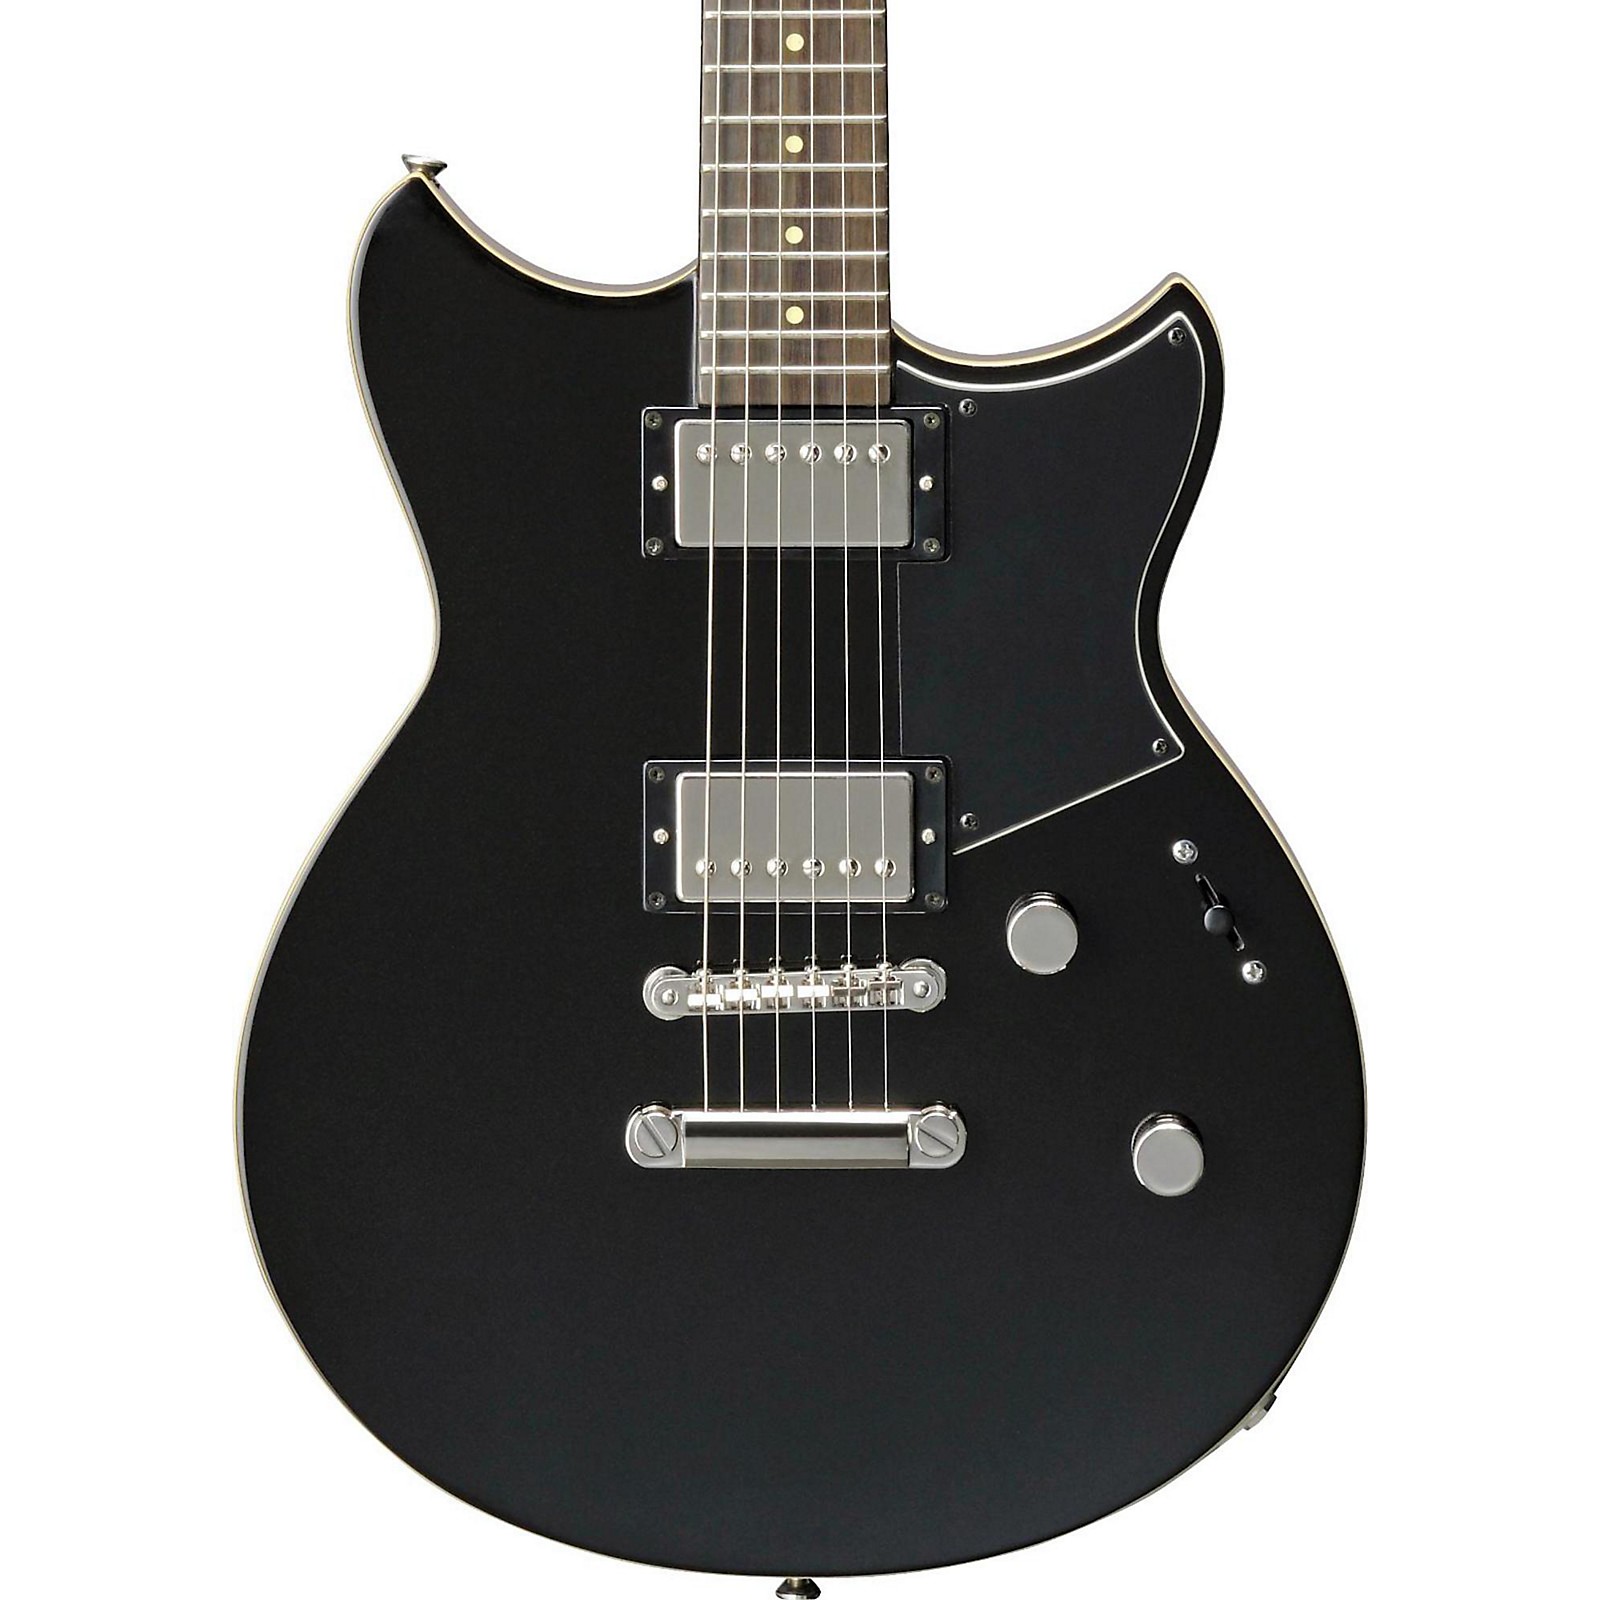 Yamaha Revstar RS420 Electric Guitar Black Steel | Guitar Center